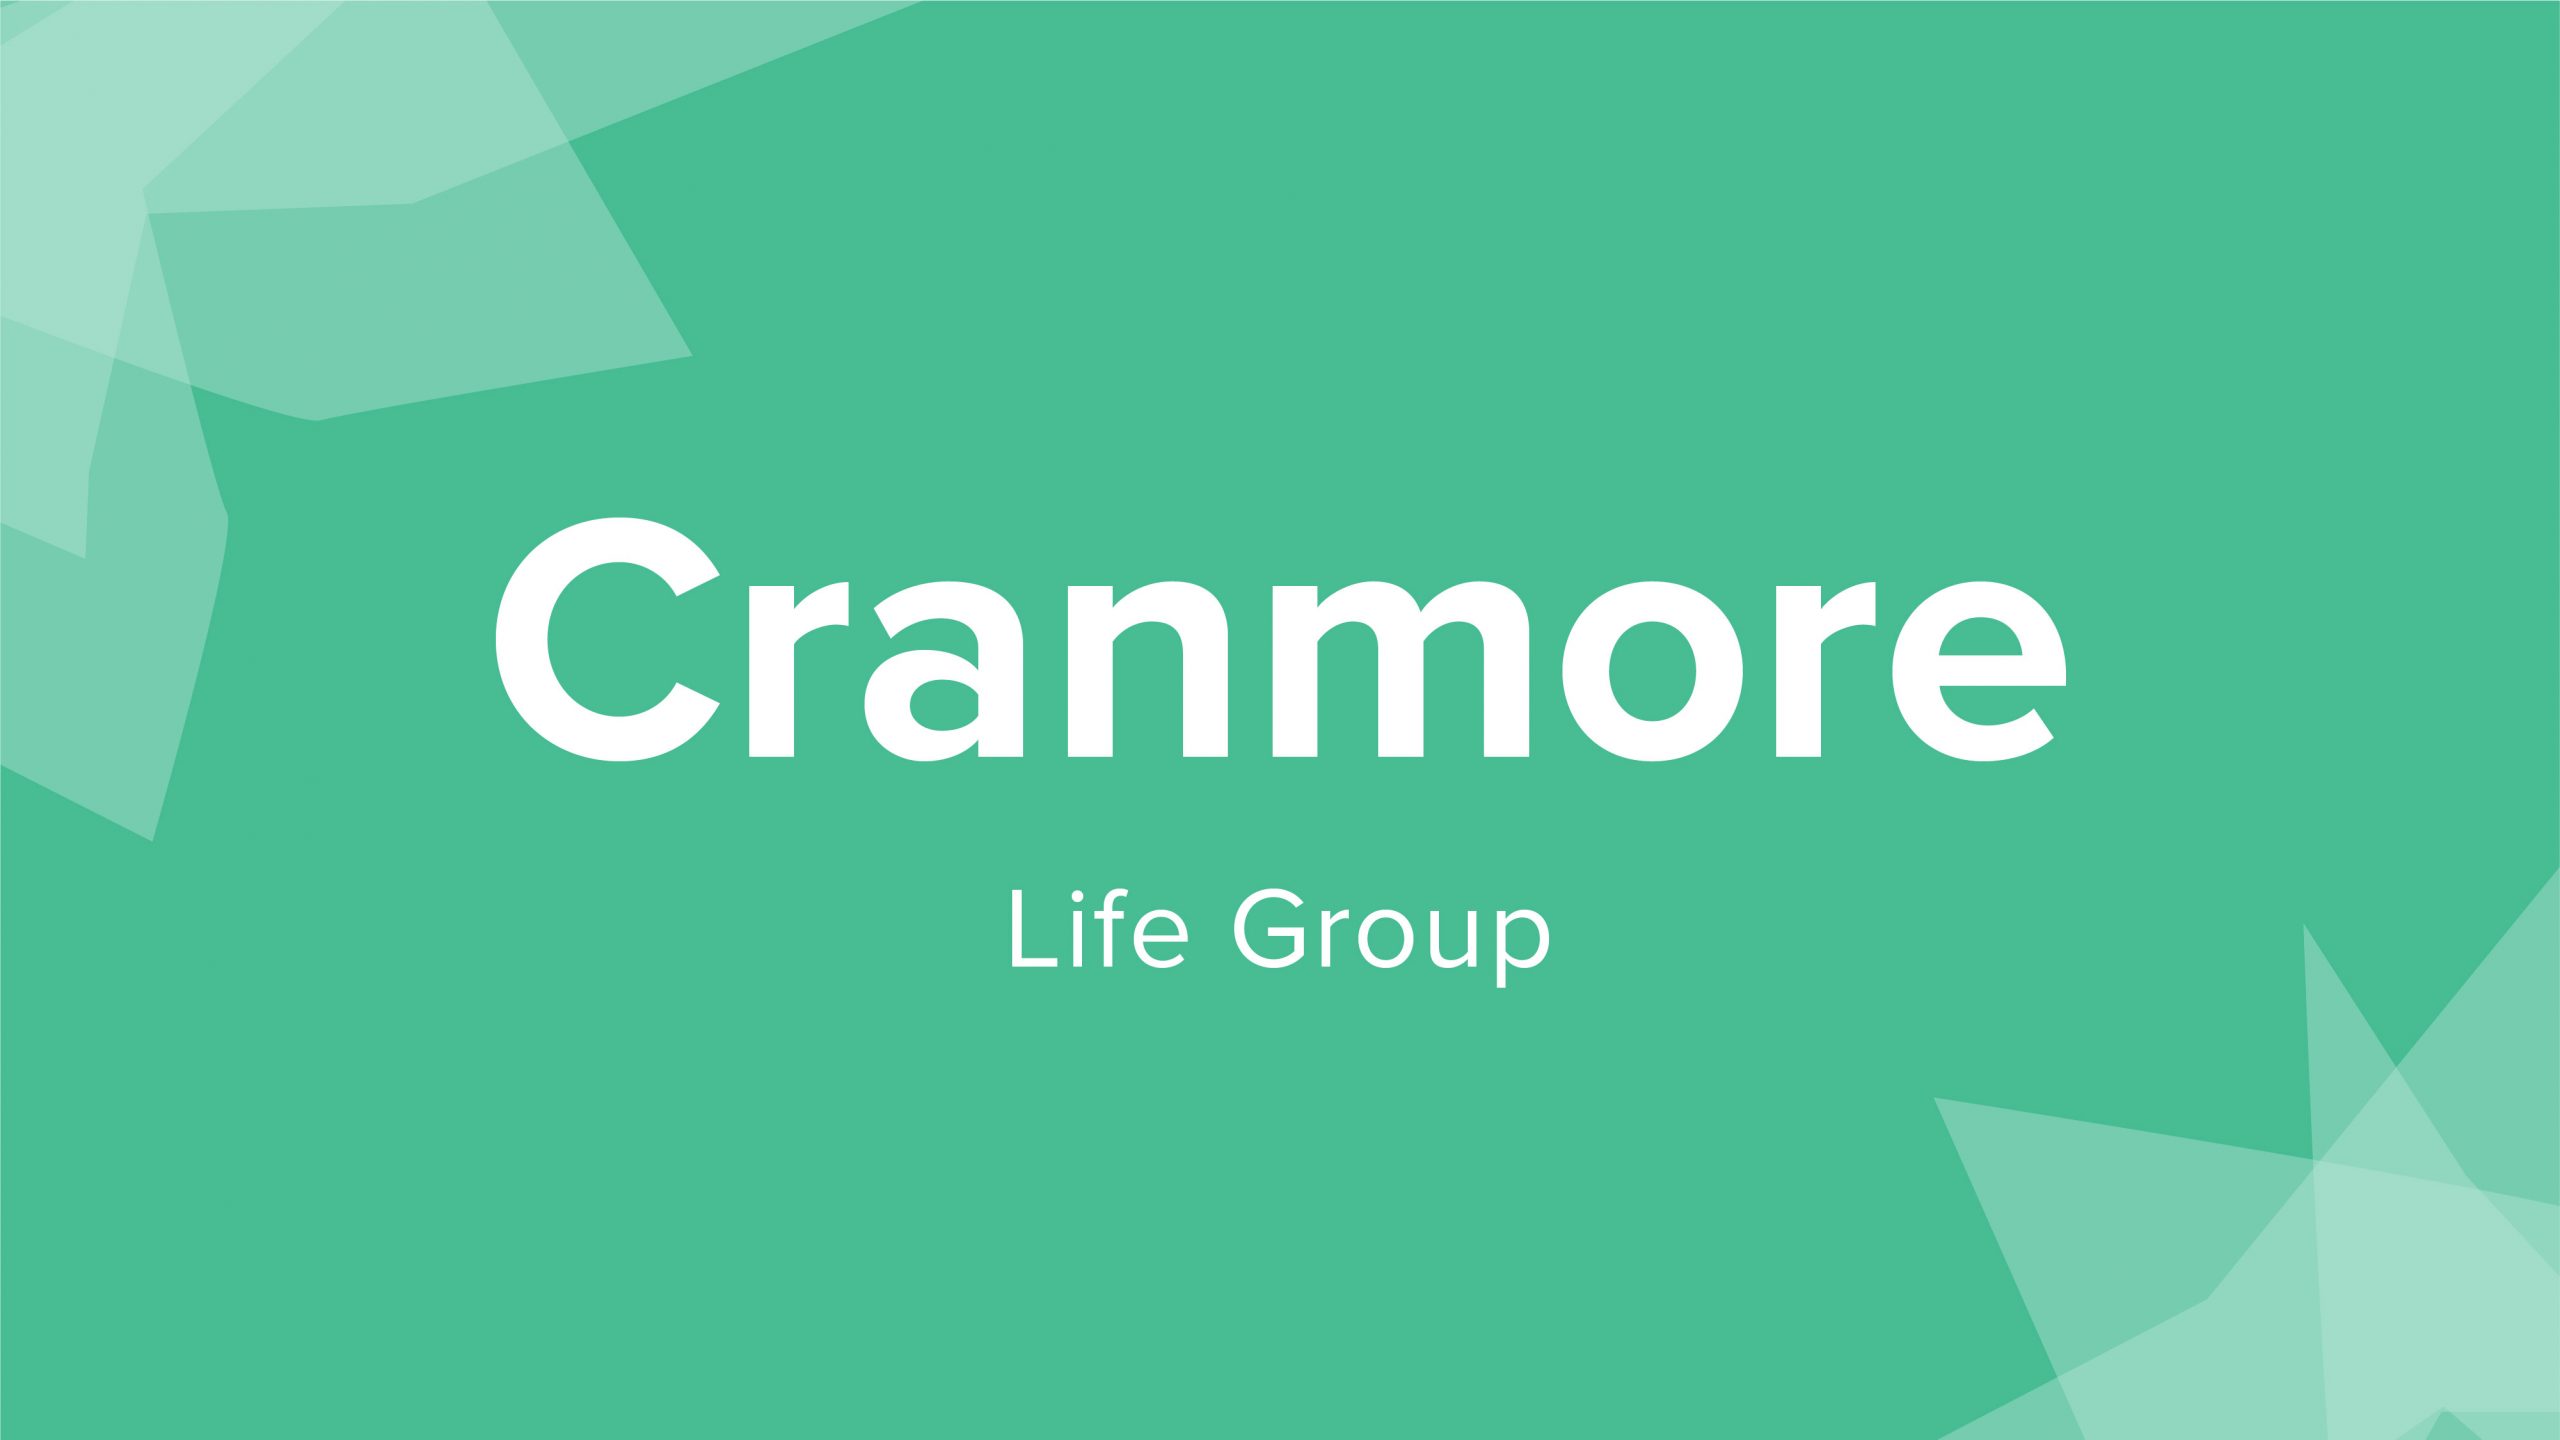 Cranmore Life Group